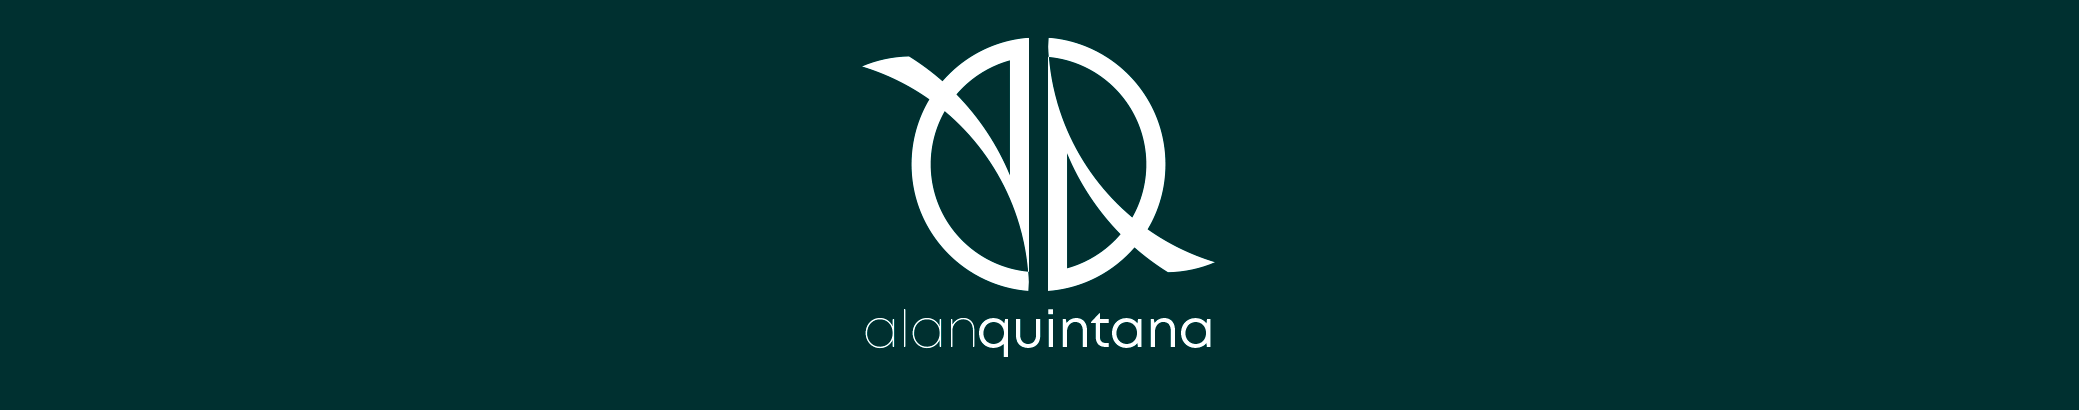 Alan Quintana 的个人资料横幅